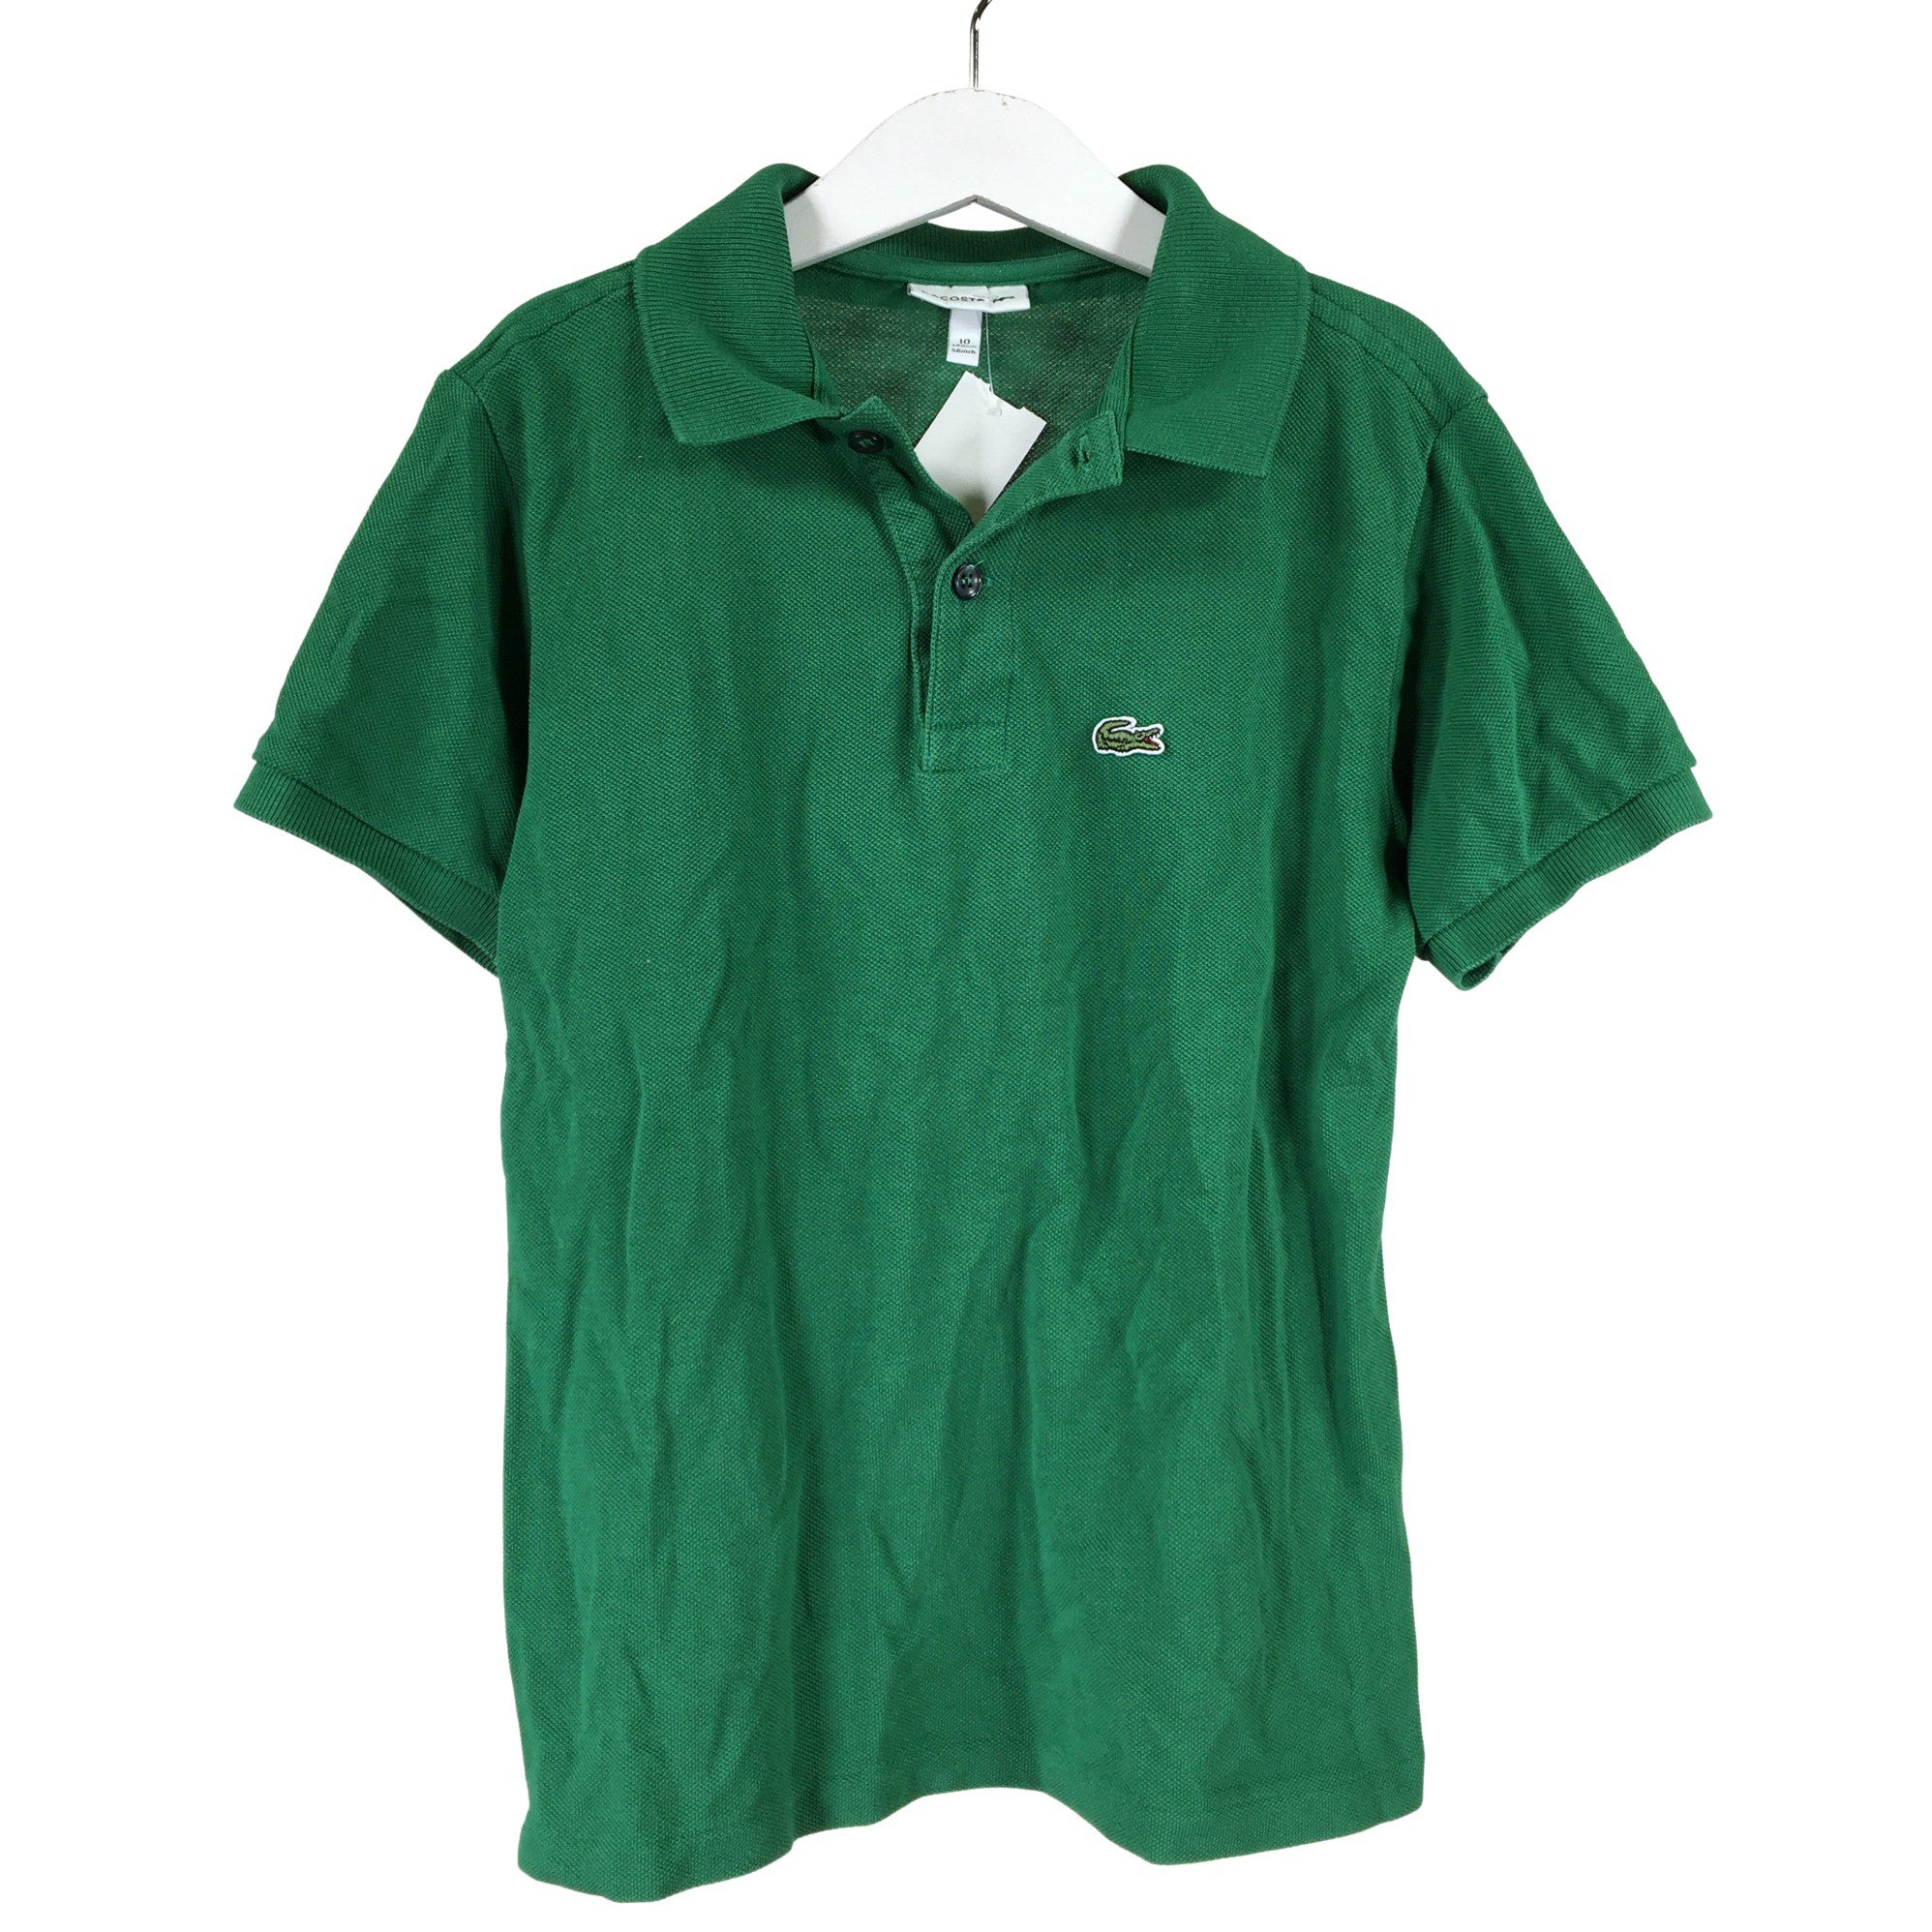 Boys' Lacoste Polo shirt, size 134 - 140 (Green) | Emmy